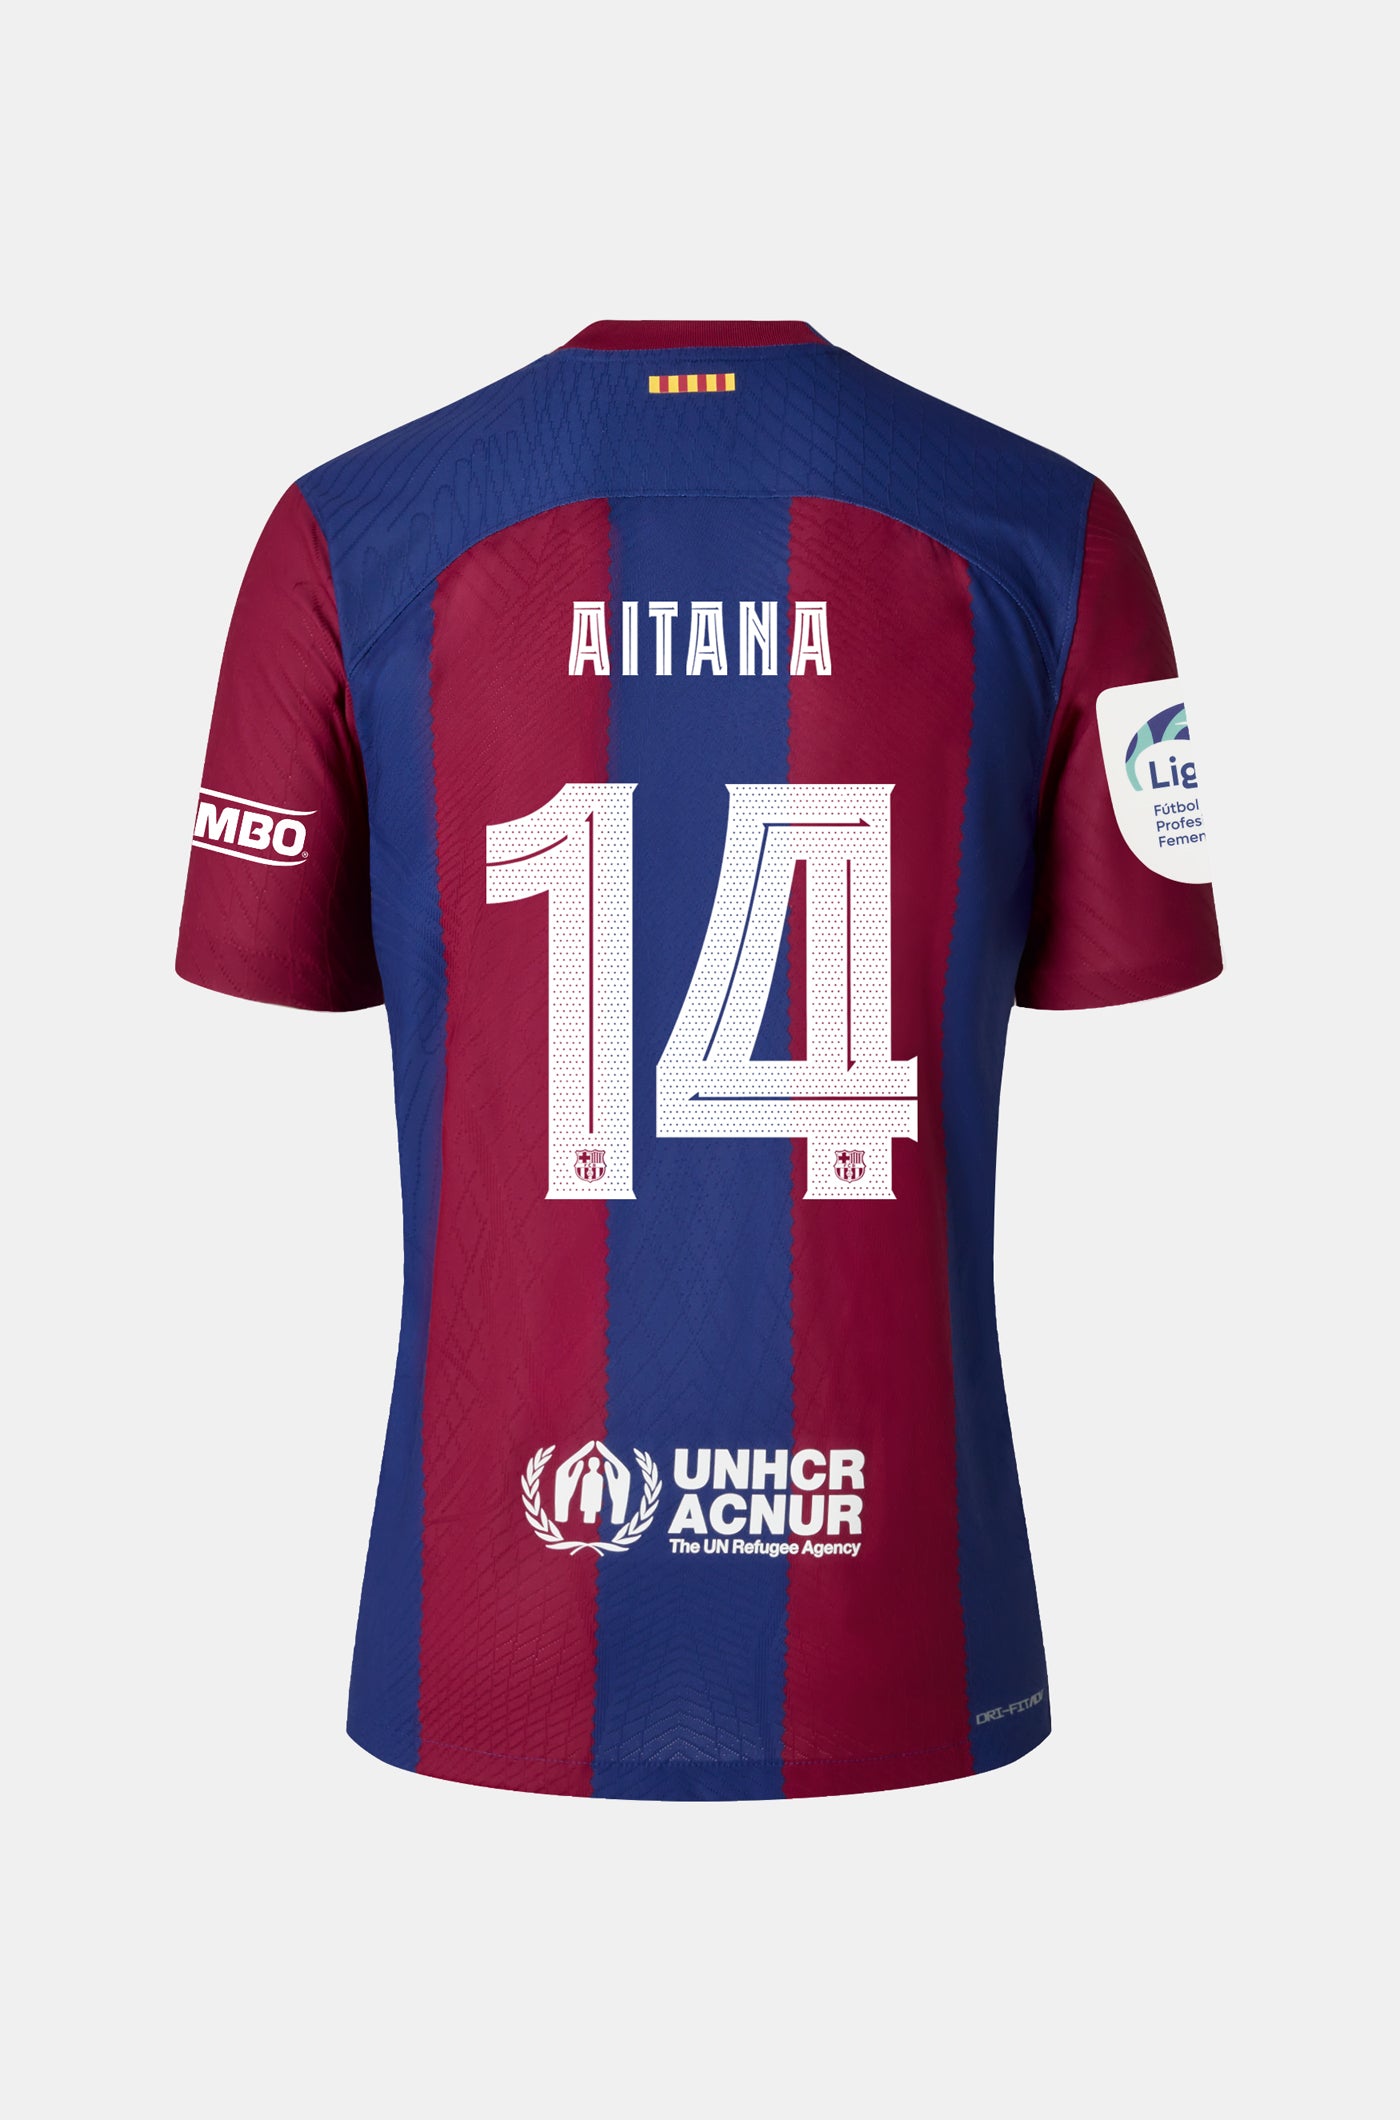 Liga F FC Barcelona Home Shirt 23/24 Player's Edition - Women - AITANA